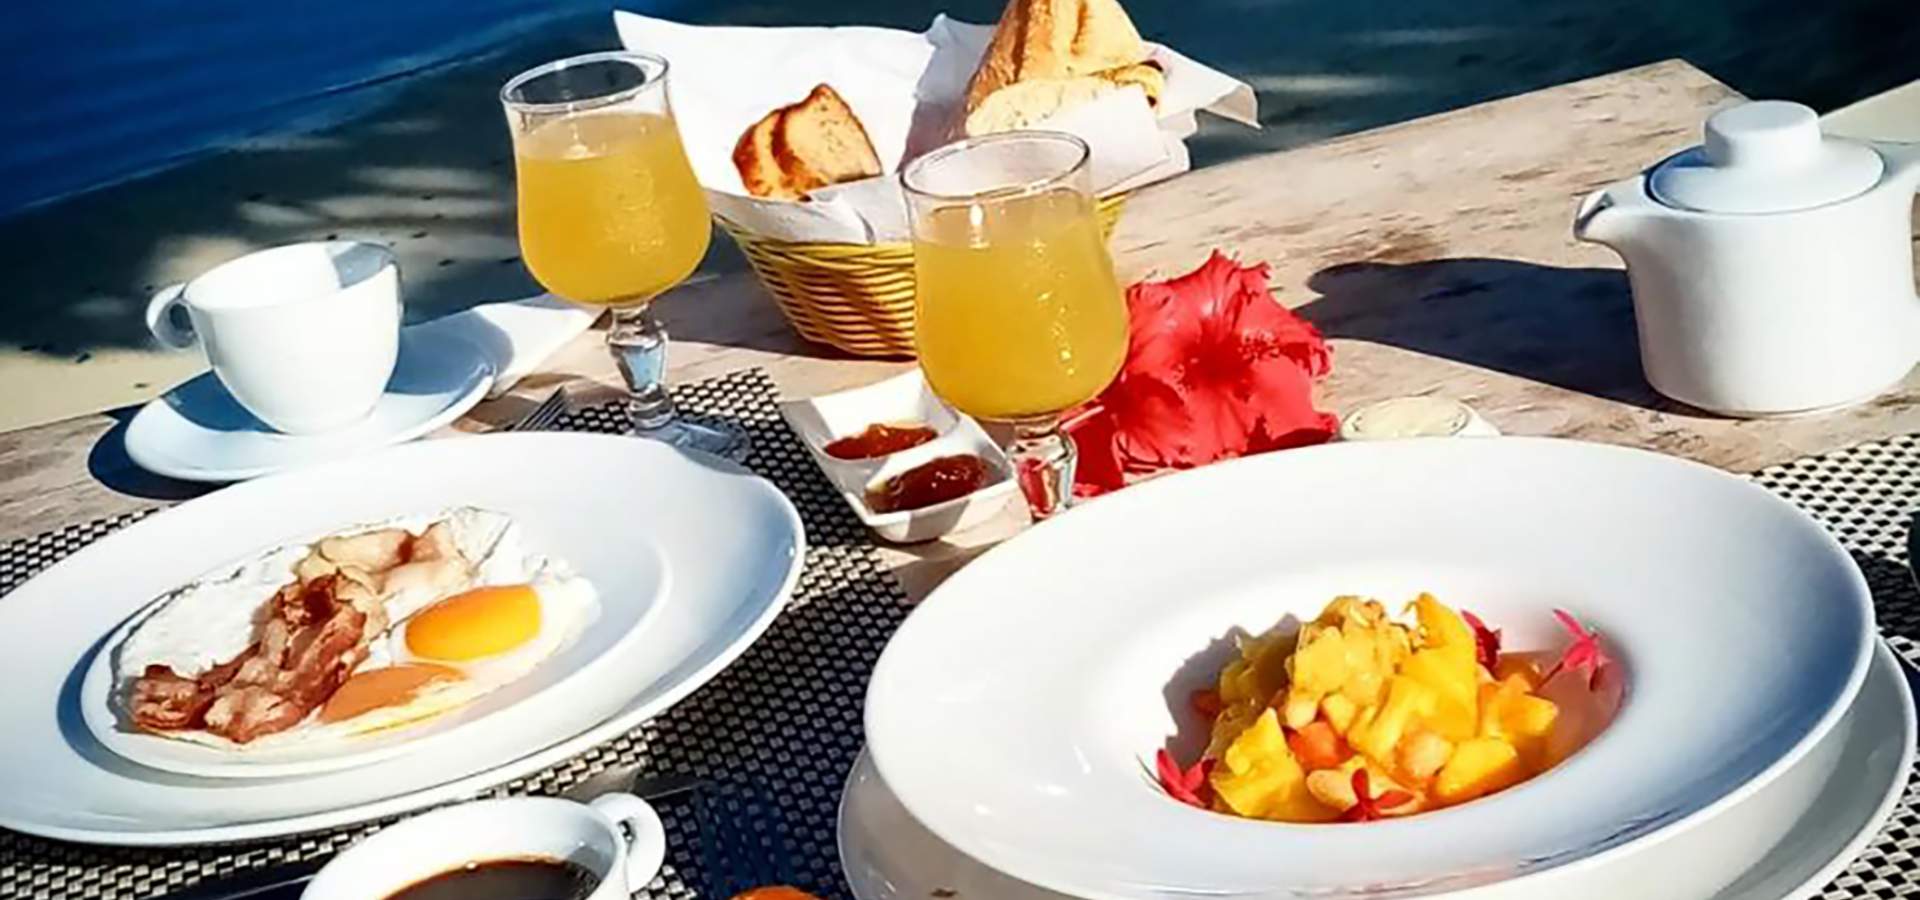 Moorea Island Beach Hotel breakfast